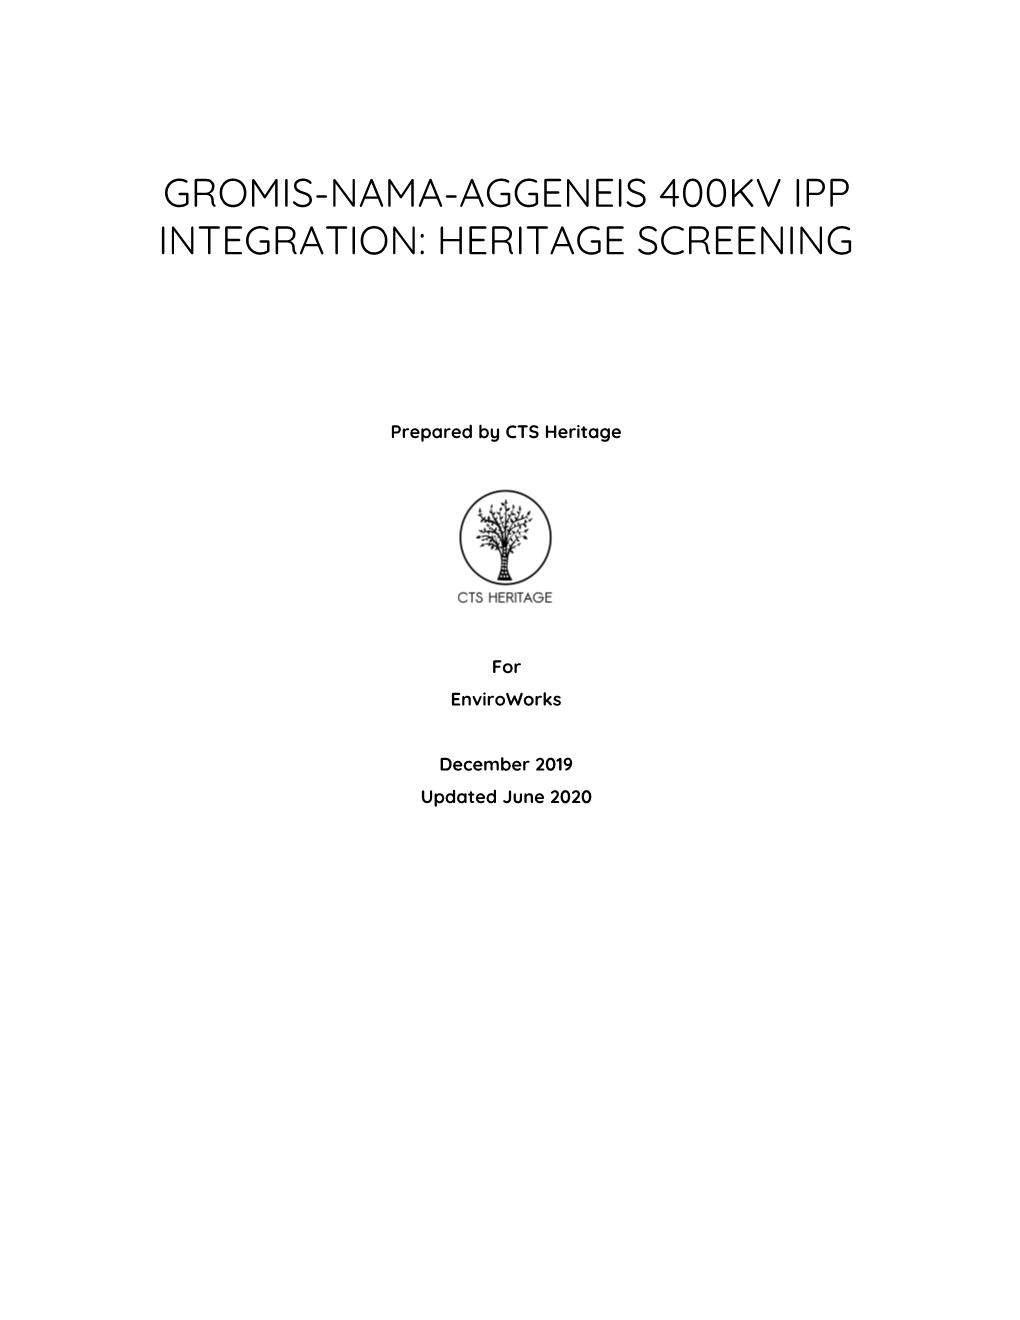 Gromis-Nama-Aggeneis 400Kv Ipp Integration: Heritage Screening